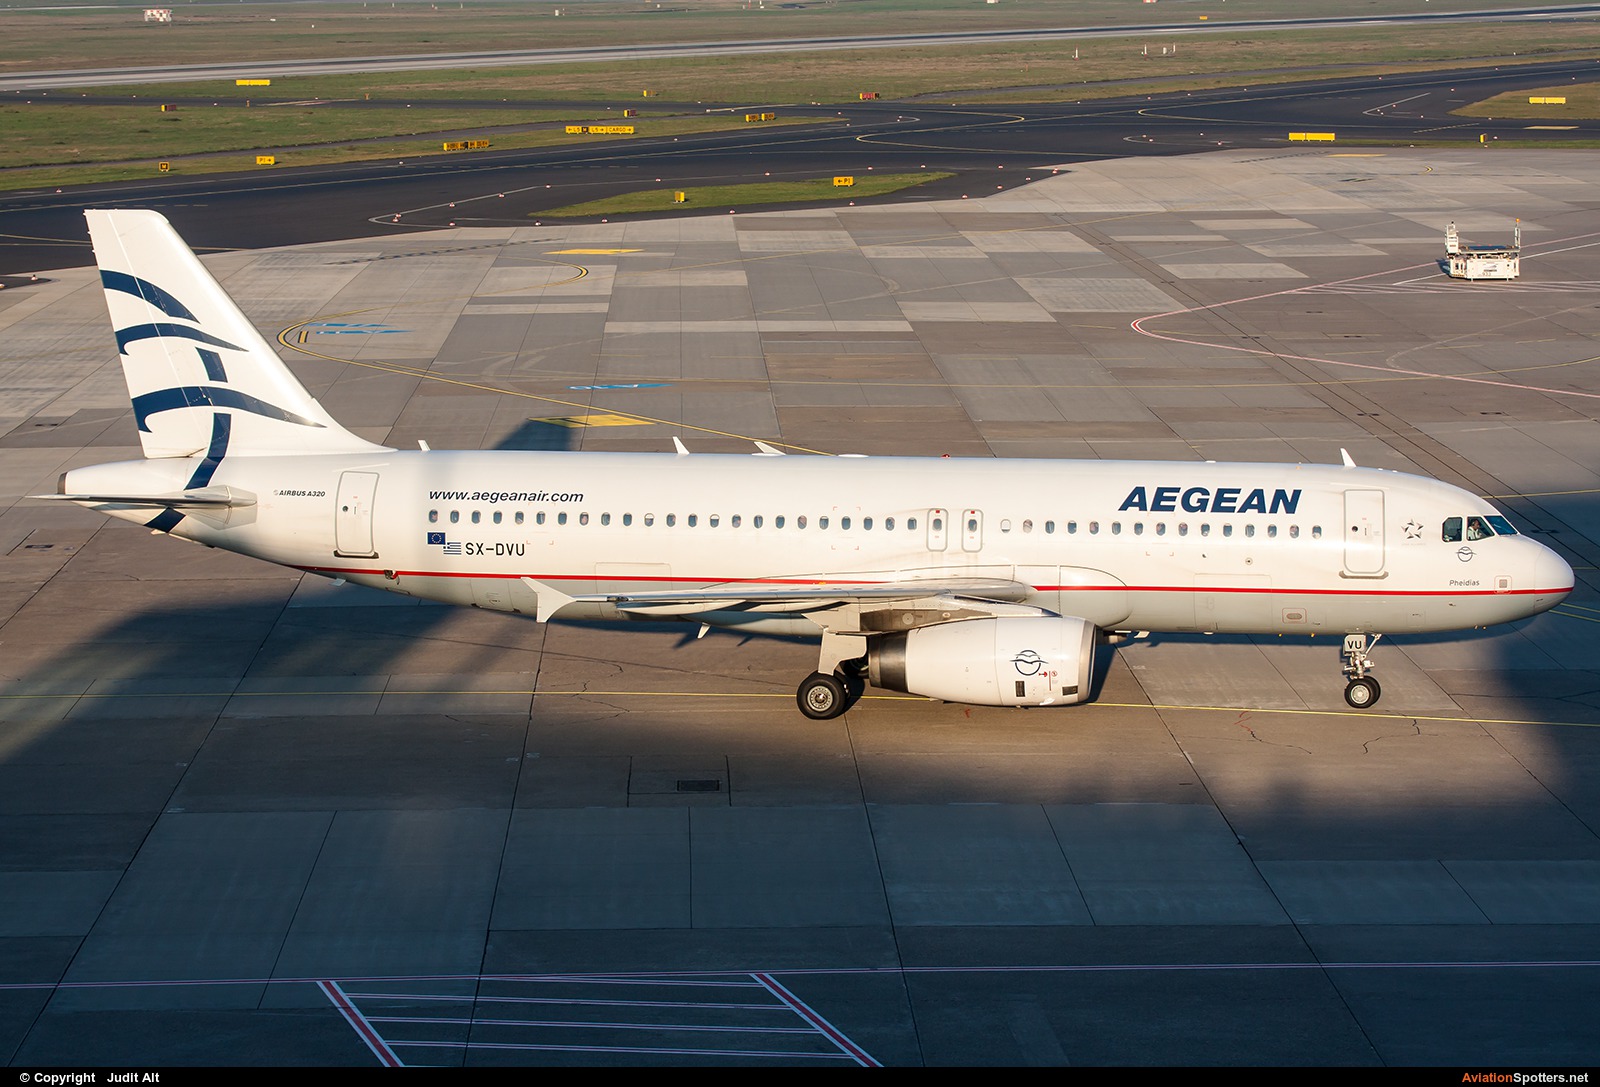 Aegean Airlines  -  A320-232  (SX-DVU) By Judit Alt (Judit)